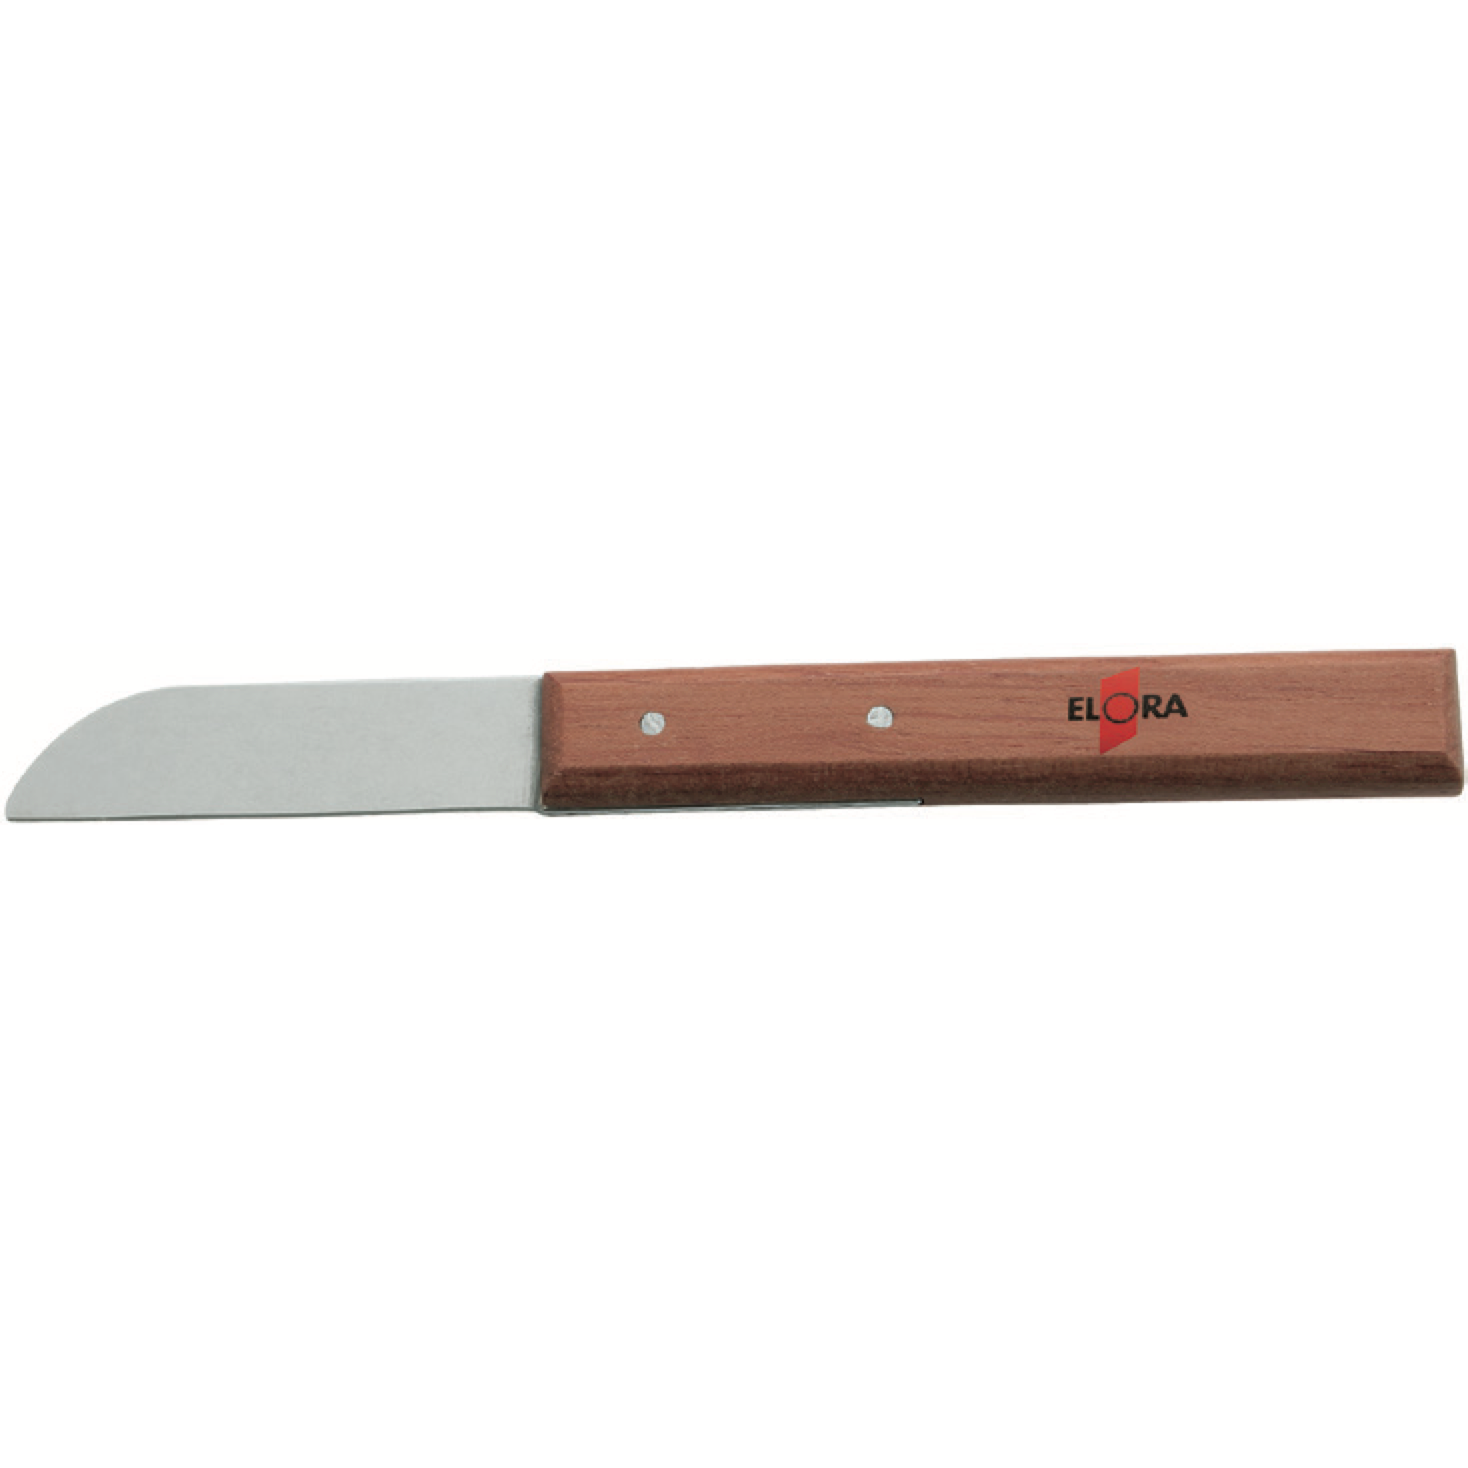 ELORA 281-B Knife/ Lead Knife (ELORA Tools) - Premium Lead Knife from ELORA - Shop now at Yew Aik.